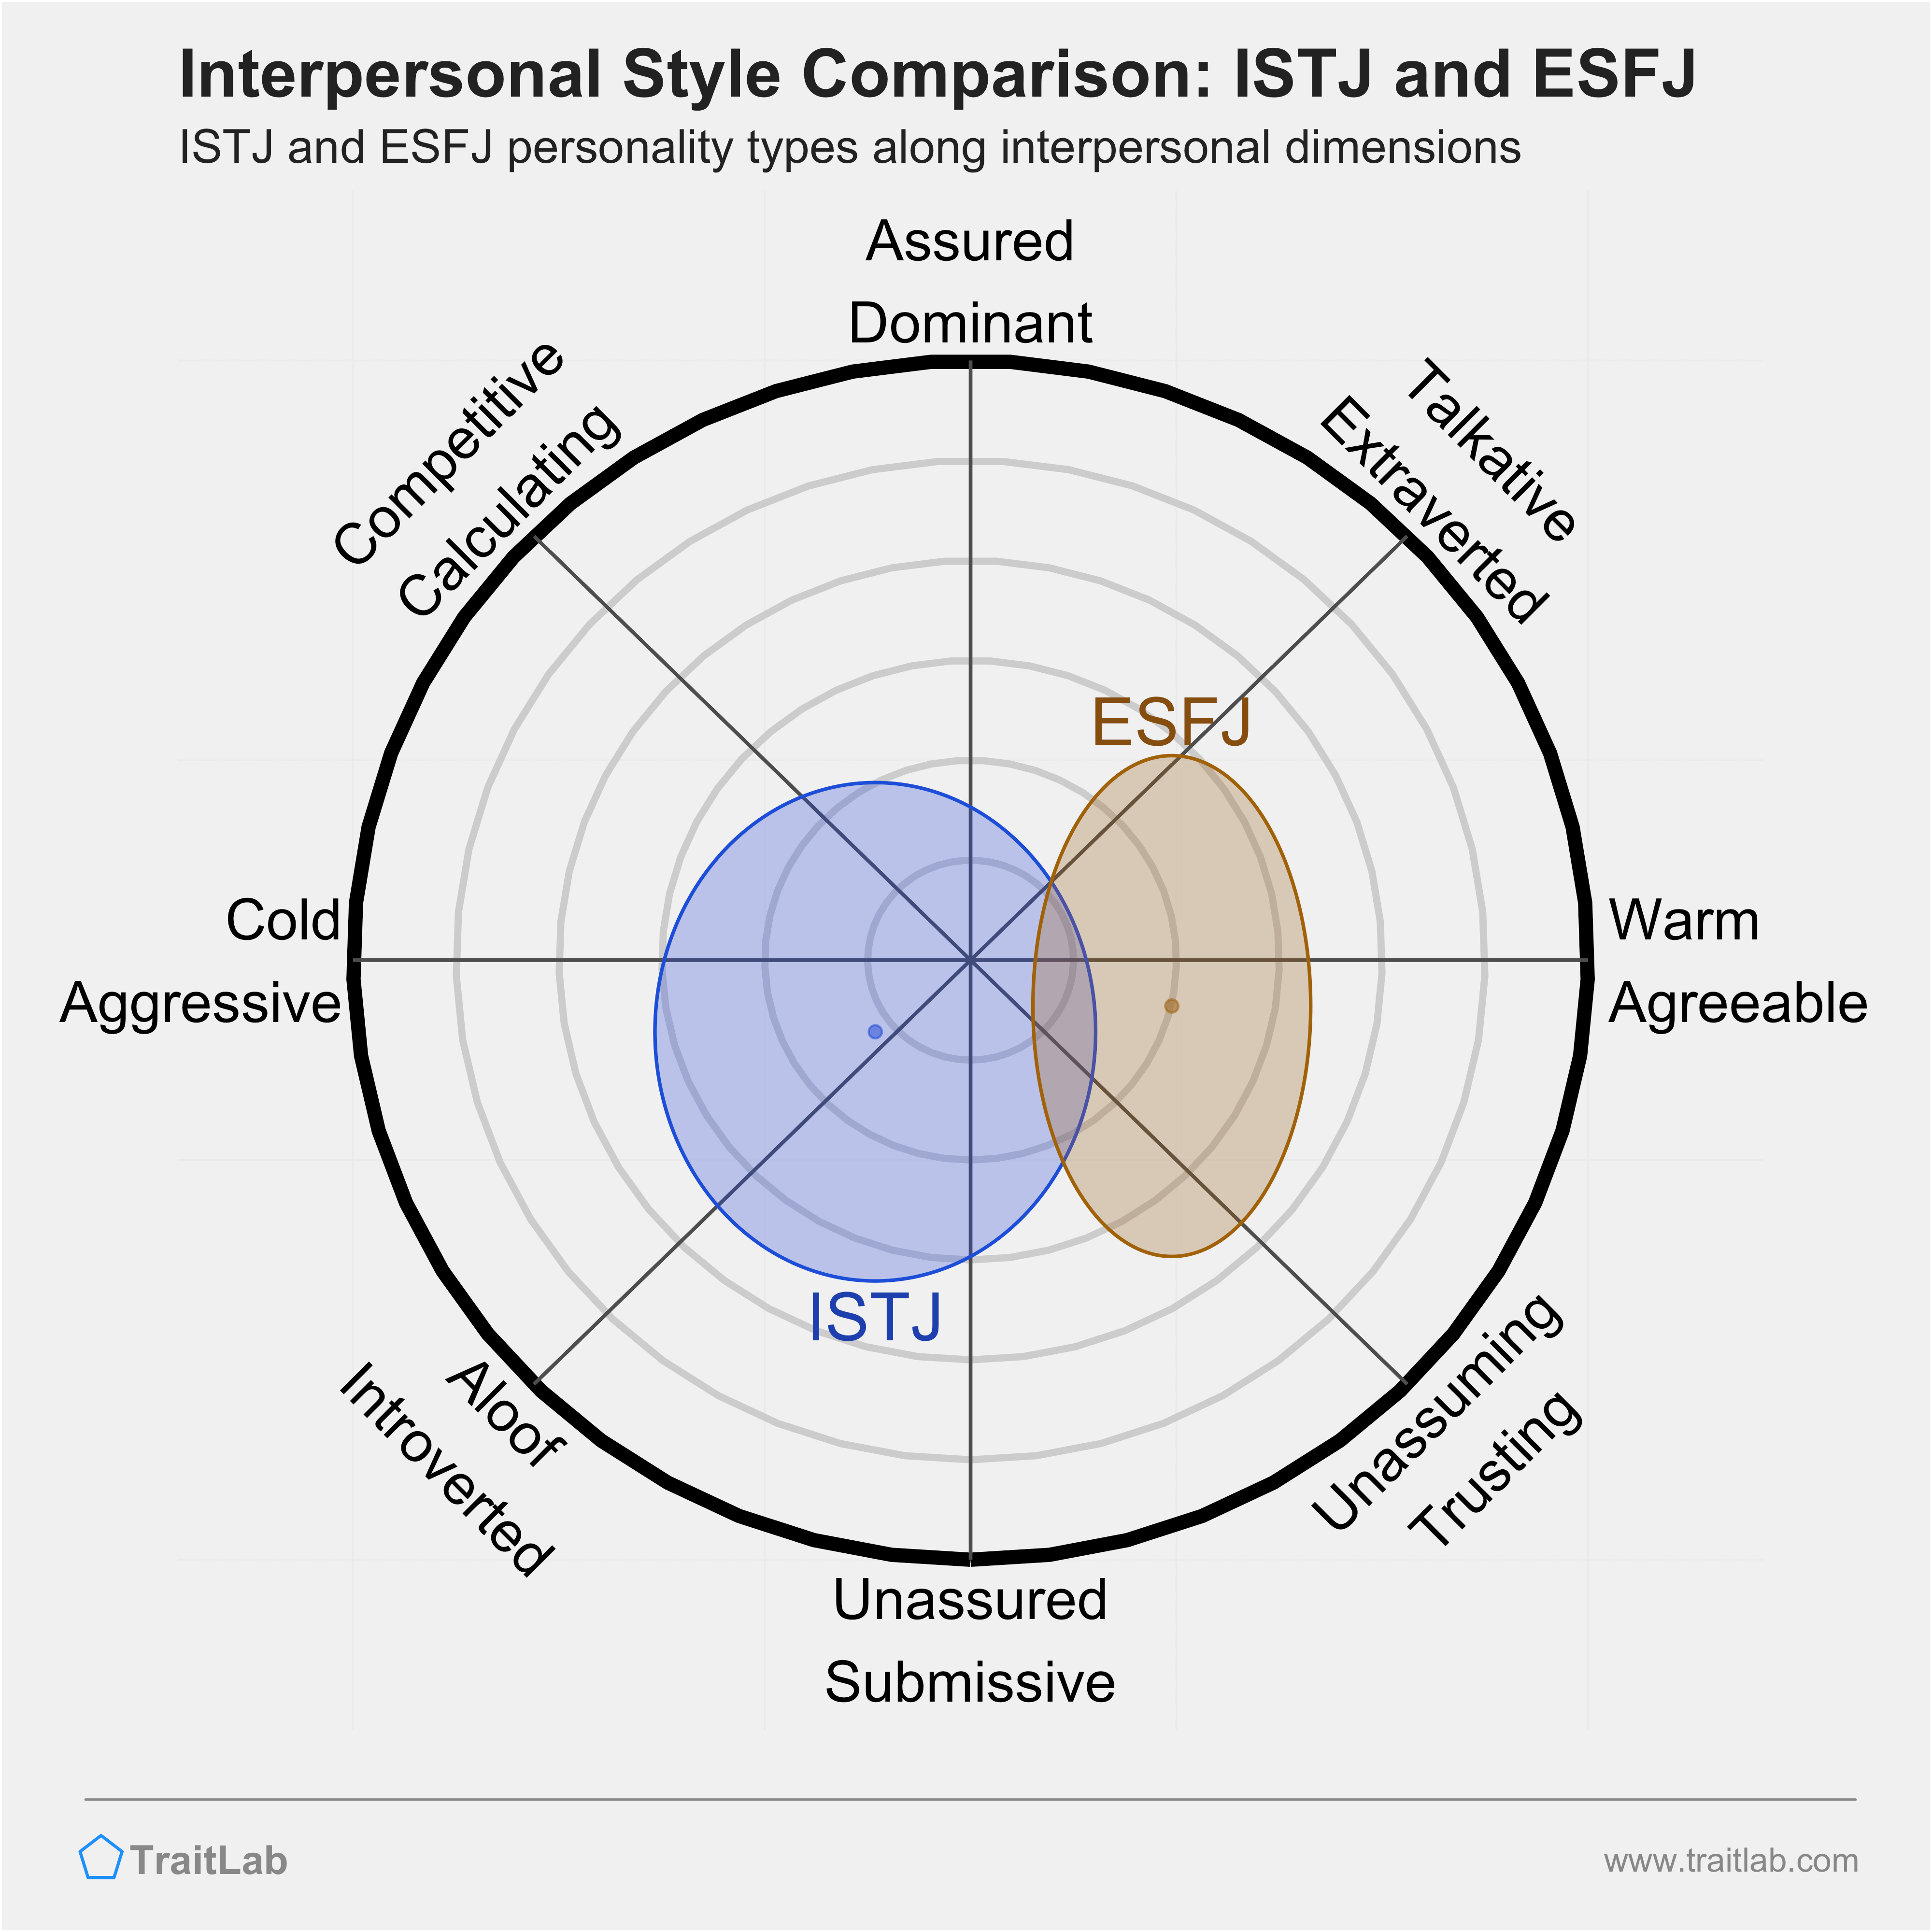 ISTJ and ESFJ comparison across interpersonal dimensions